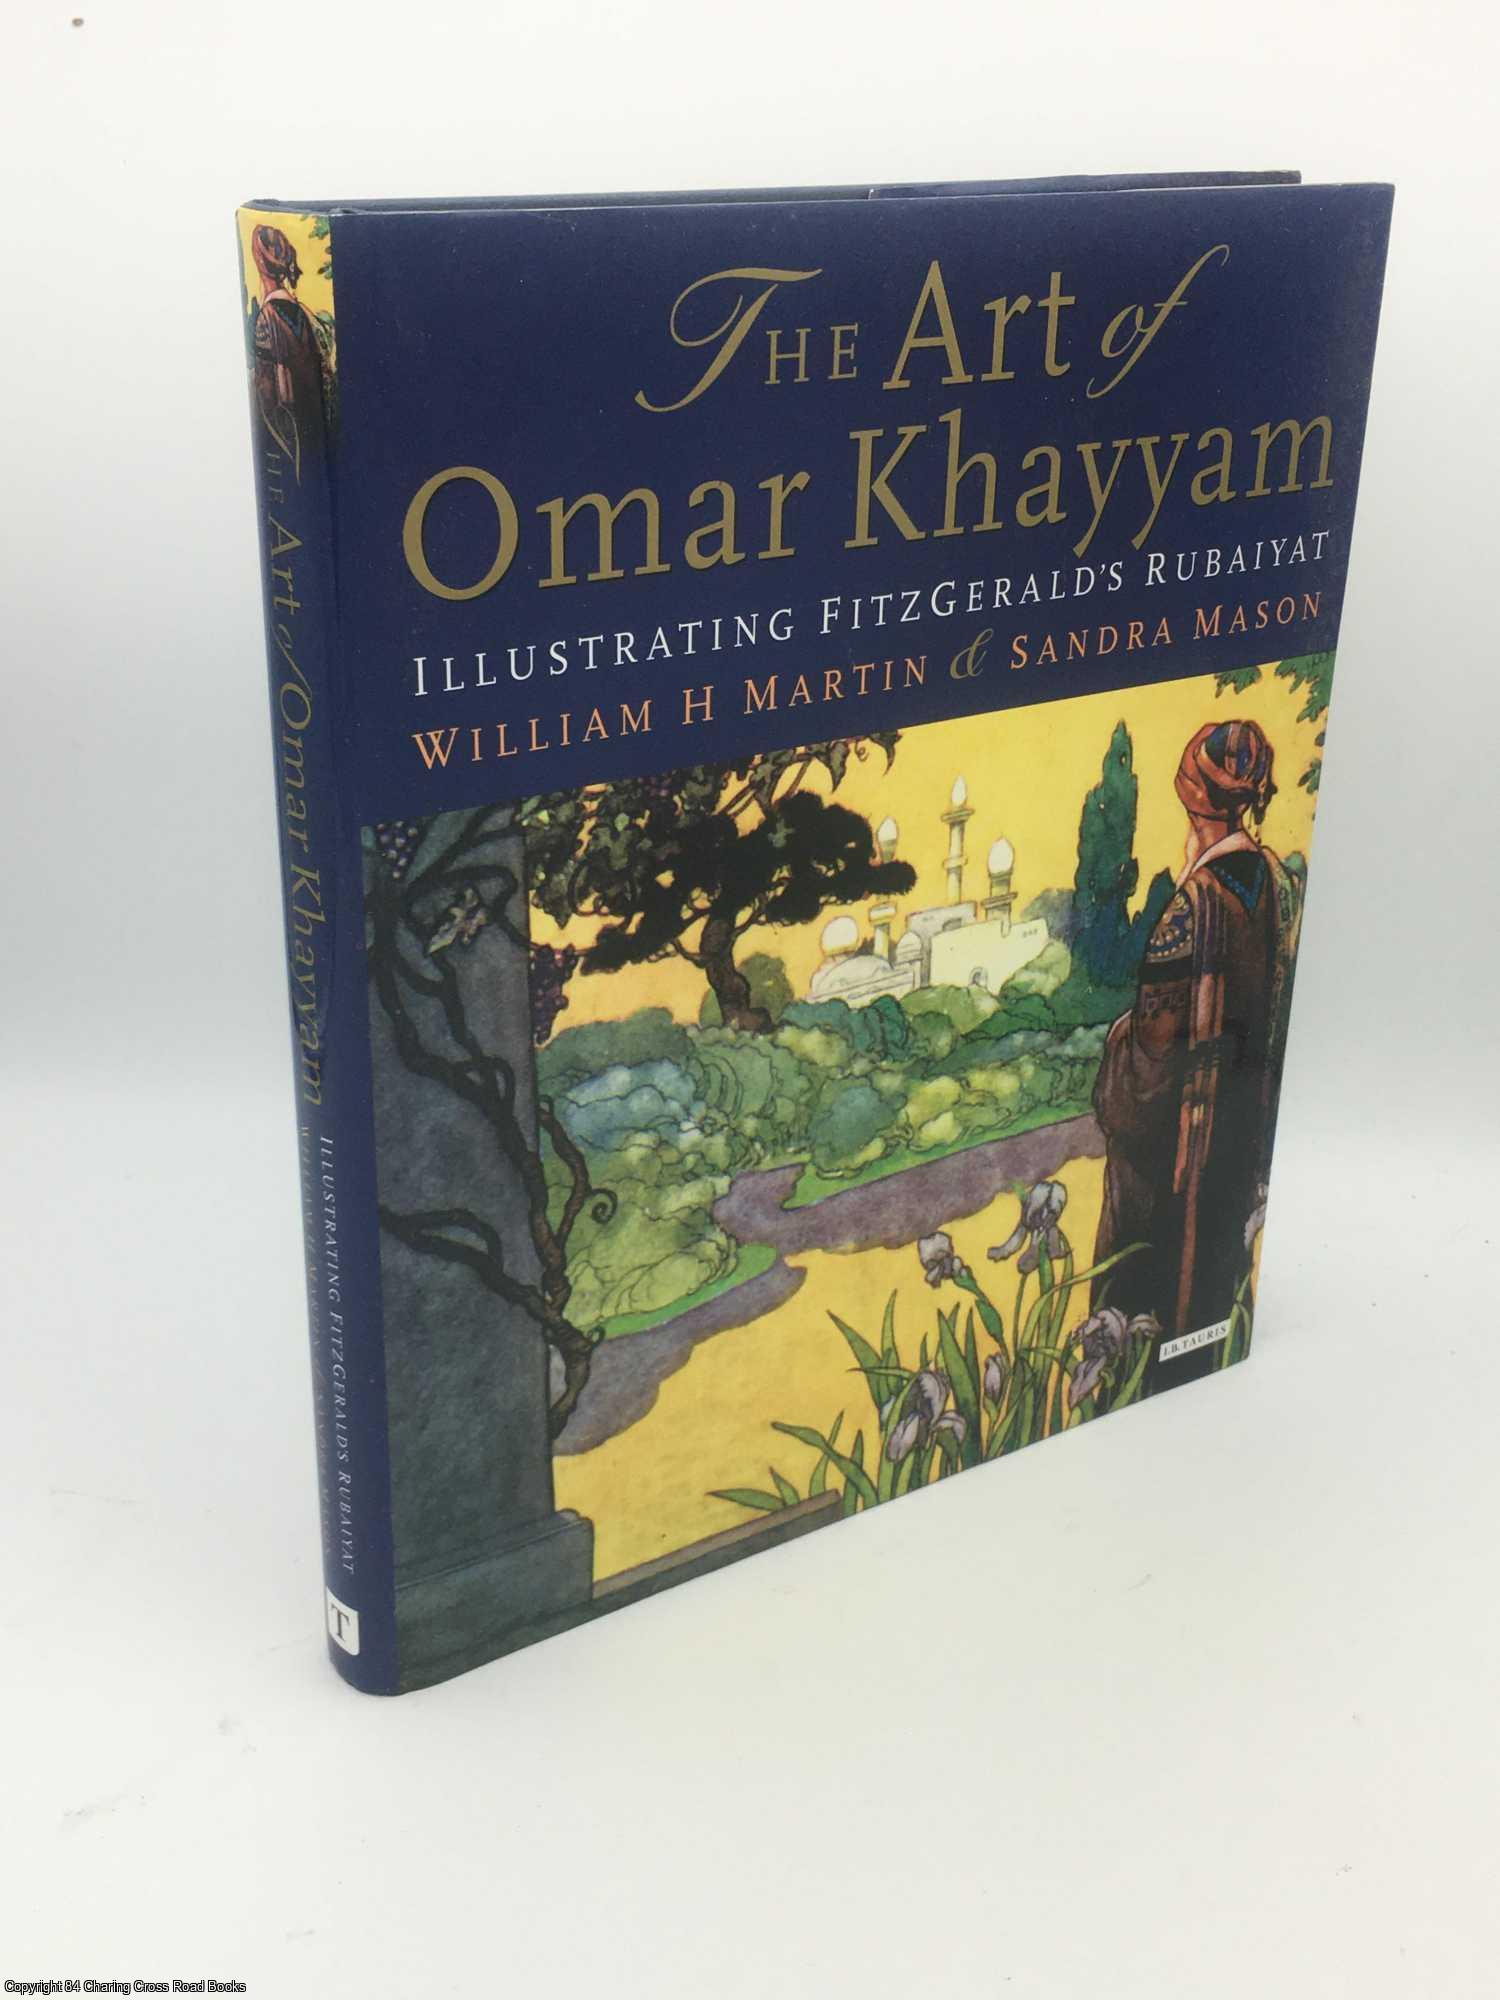 Martin, William H. - The Art of Omar Khayyam: Illustrating Fitzgerald's Rubaiyat